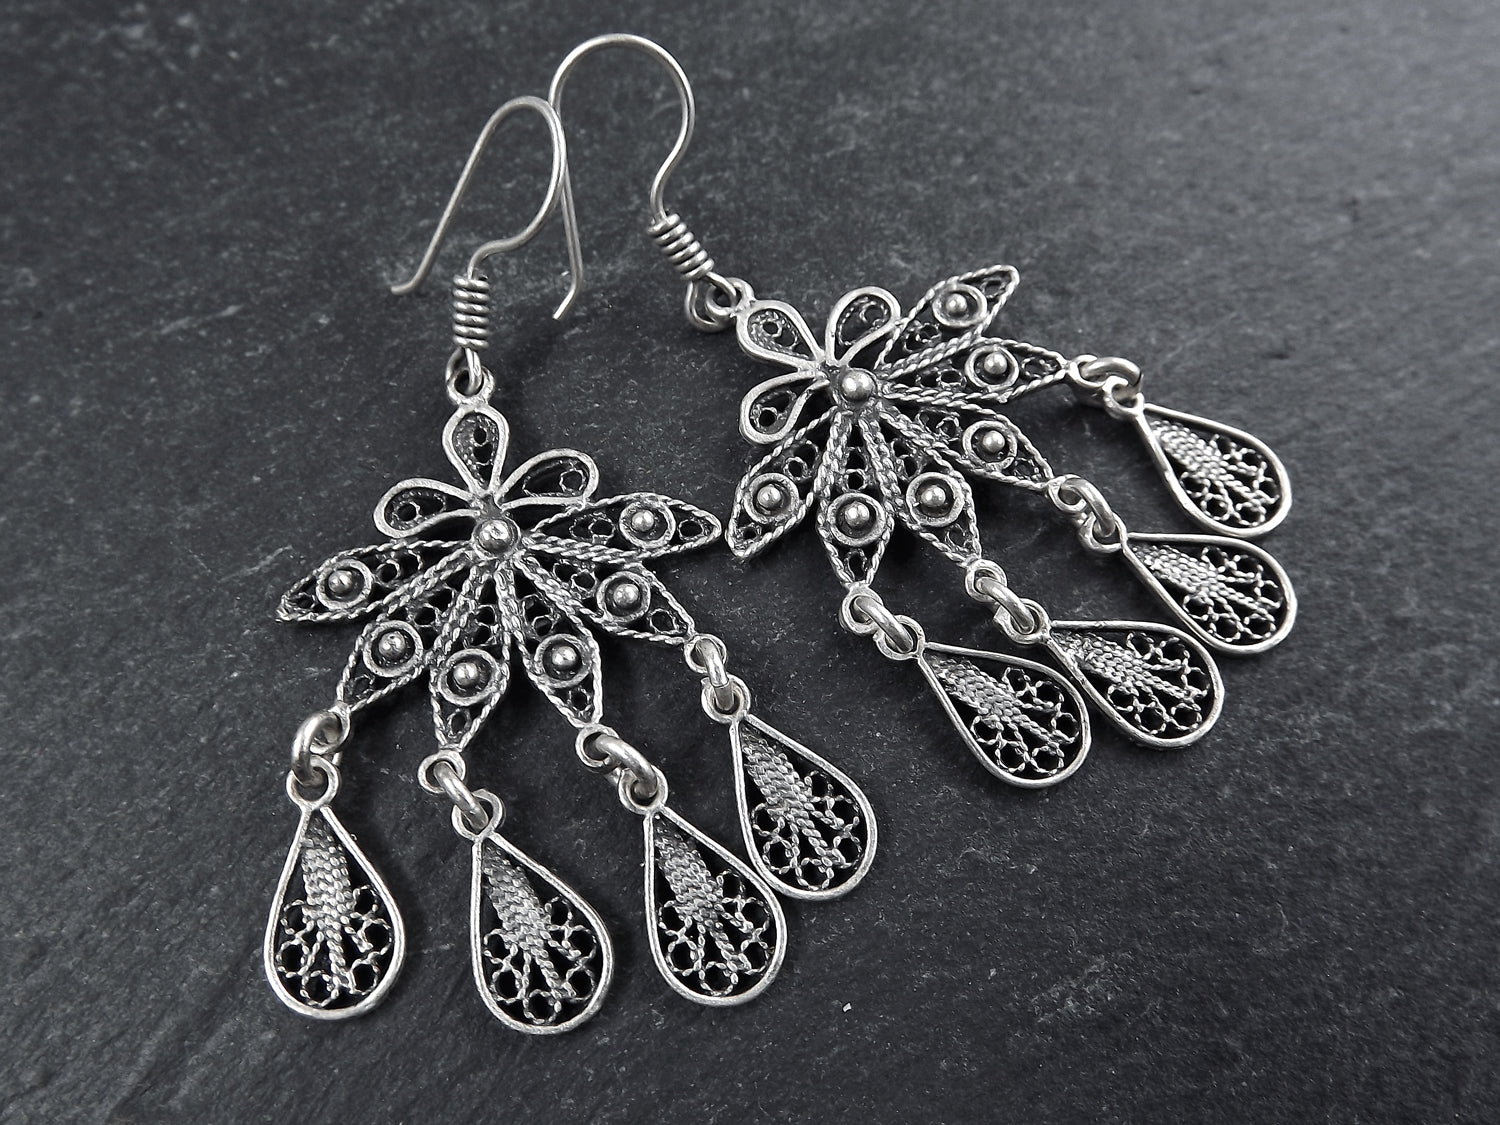 Petals Fan Shaped Telkari Dangly Silver Ethnic Boho Earrings - Authentic Turkish Style